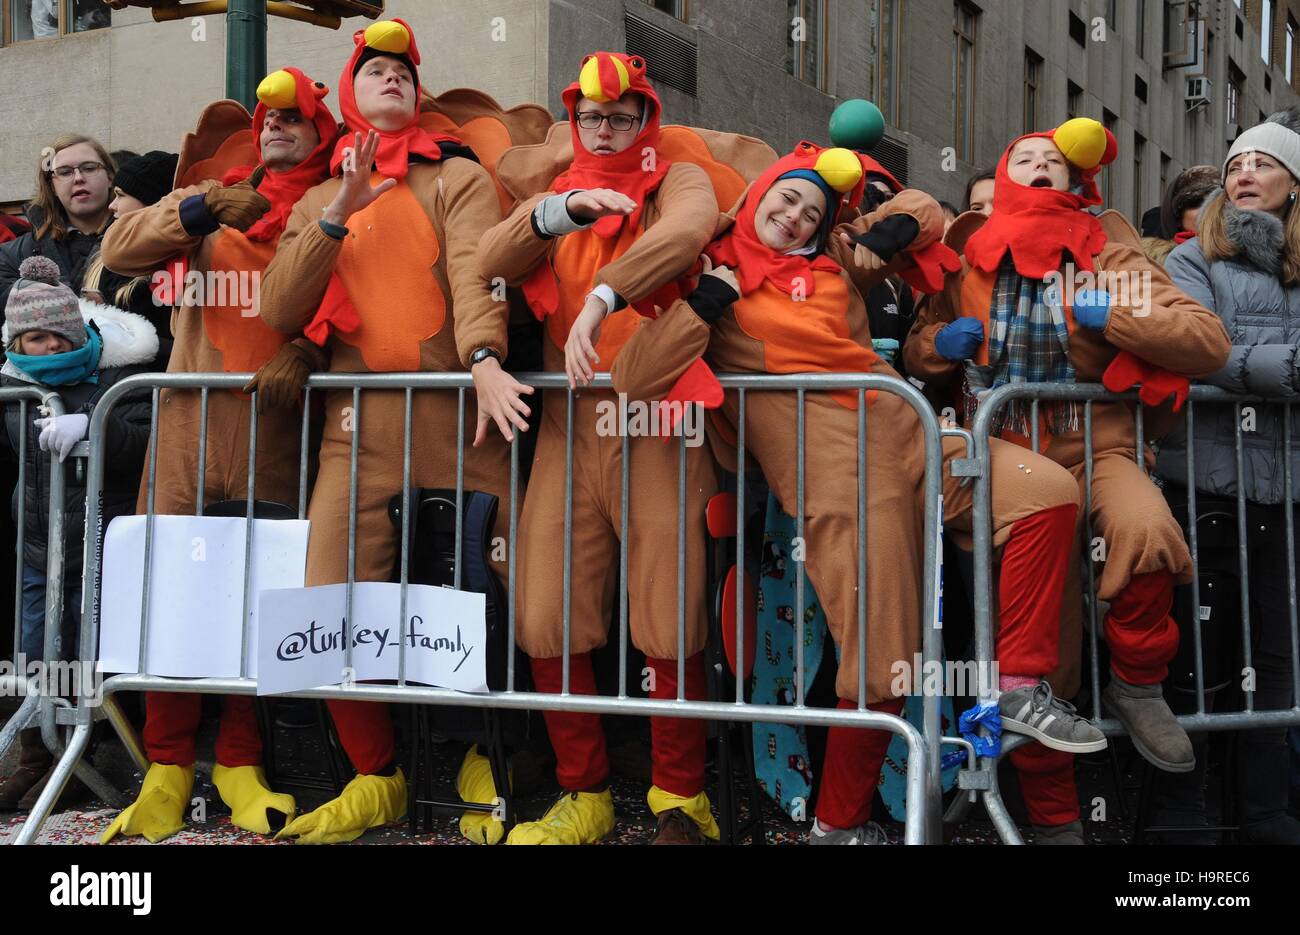 New York, NY, USA. 24th Nov, 2016. Turkey Family in attendance for Macy's Thanksgiving Day Parade 2016, New York, NY November 24, 2016. Credit:  Kristin Callahan/Everett Collection/Alamy Live News Stock Photo